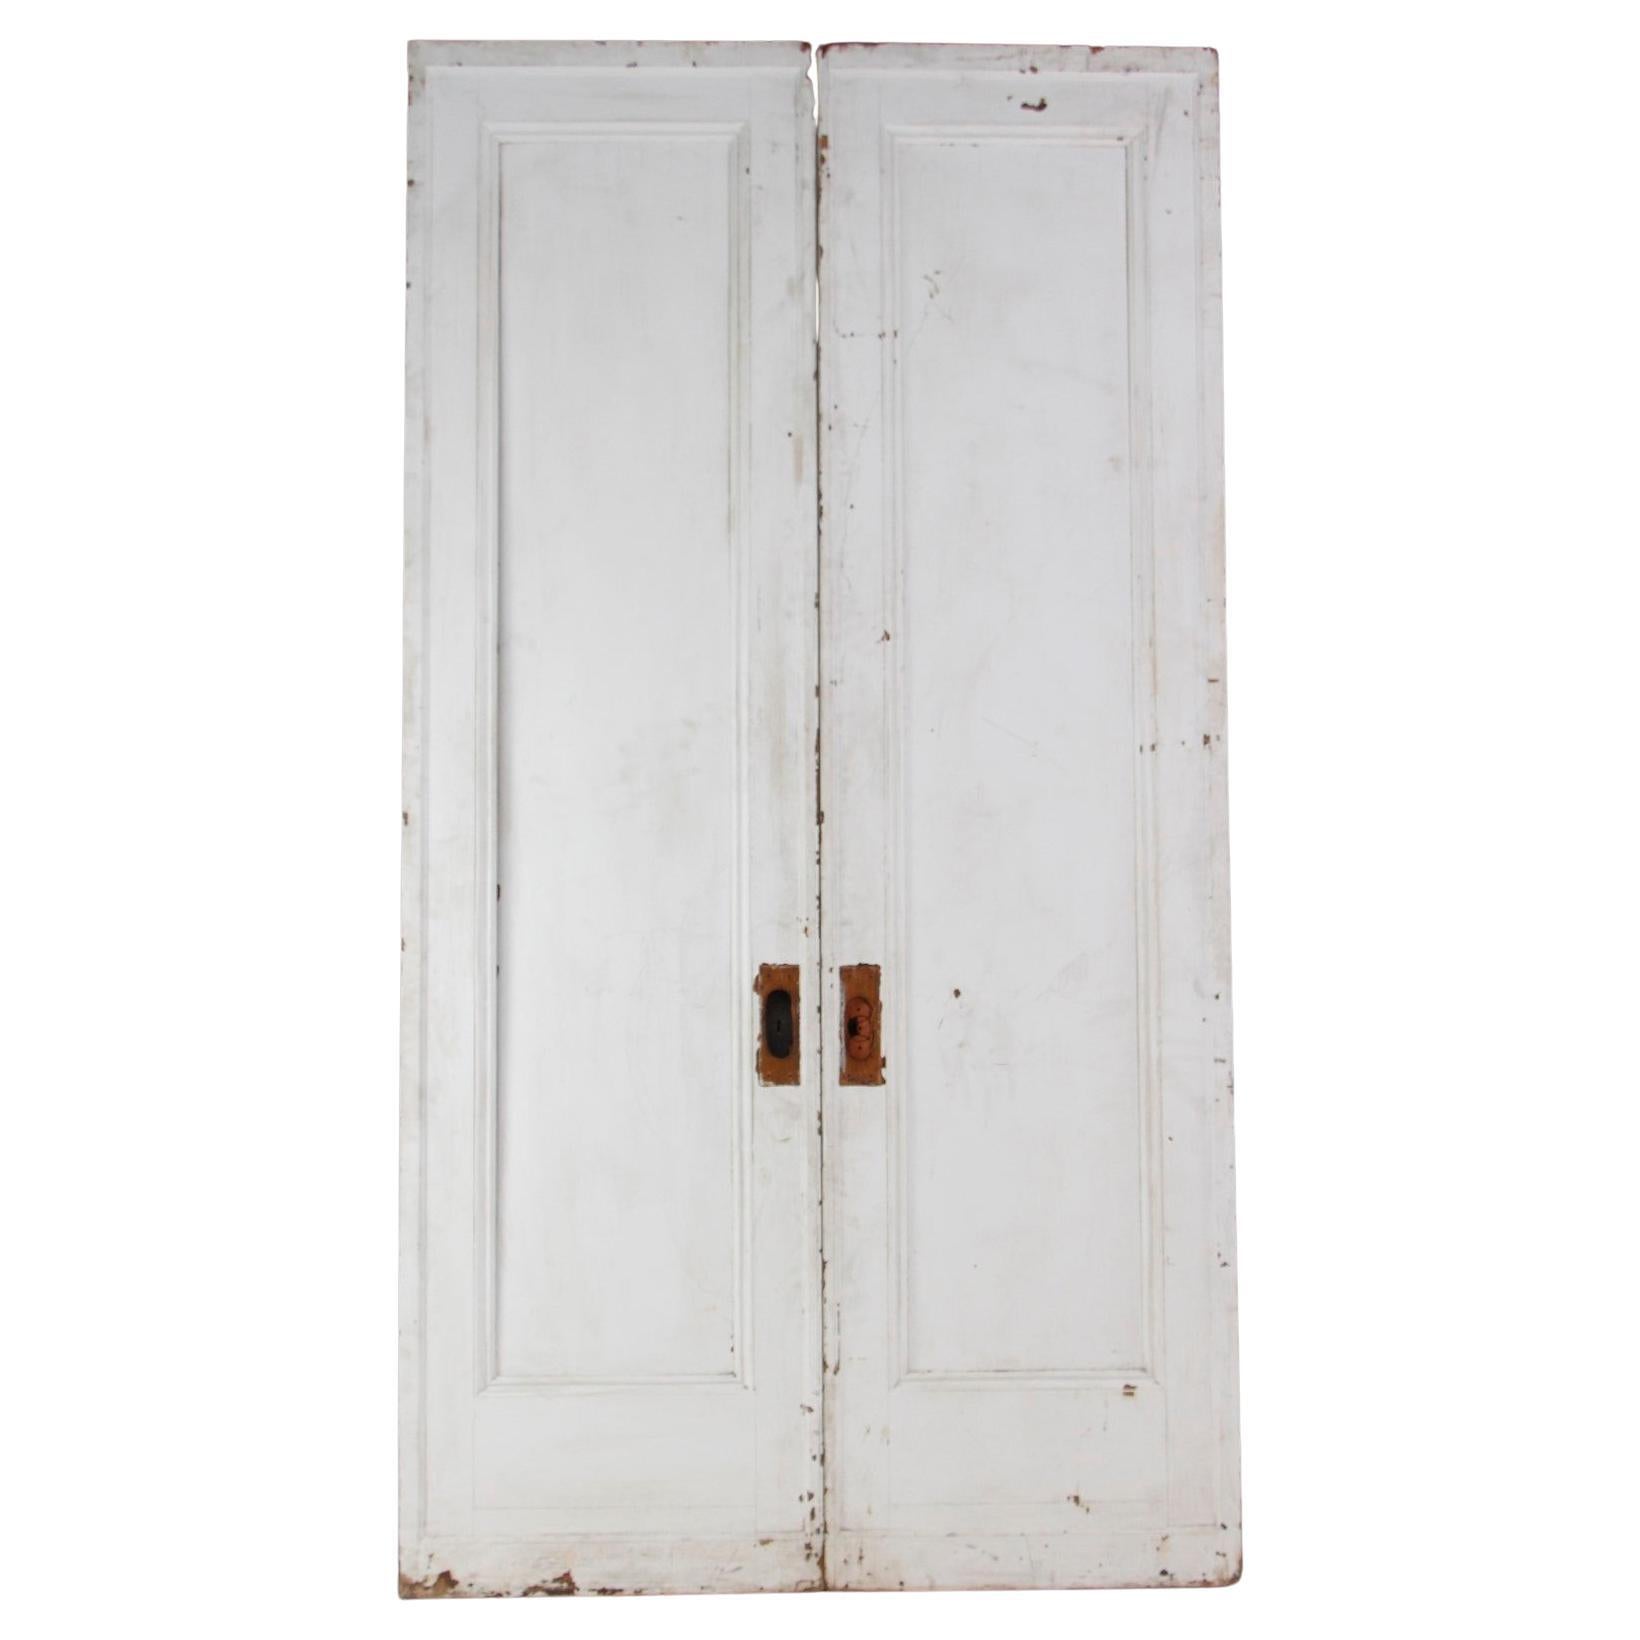 Set of Pocket Doors w/ Dark Tone Wood & One Side Painted White